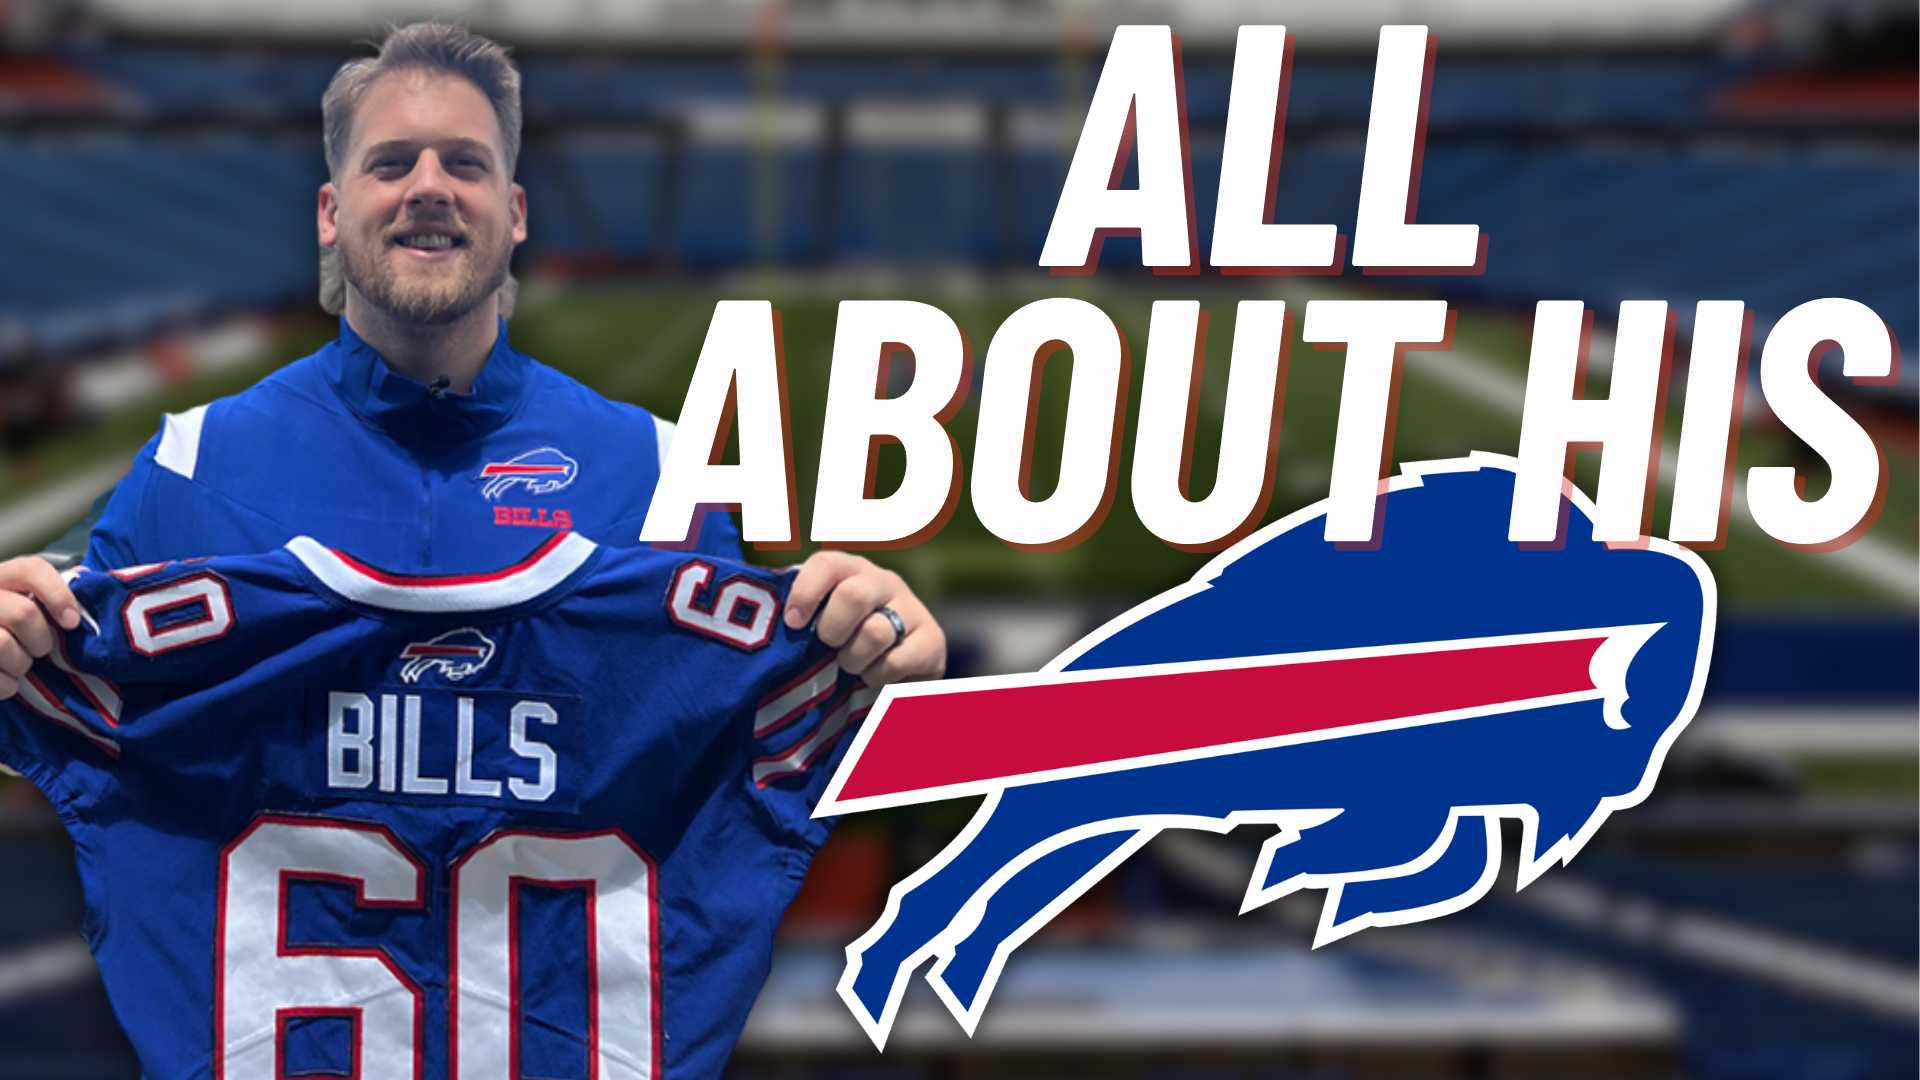 Buffalo Bills sign Bills to play on Bills offensive line; He says 'Go Bills'